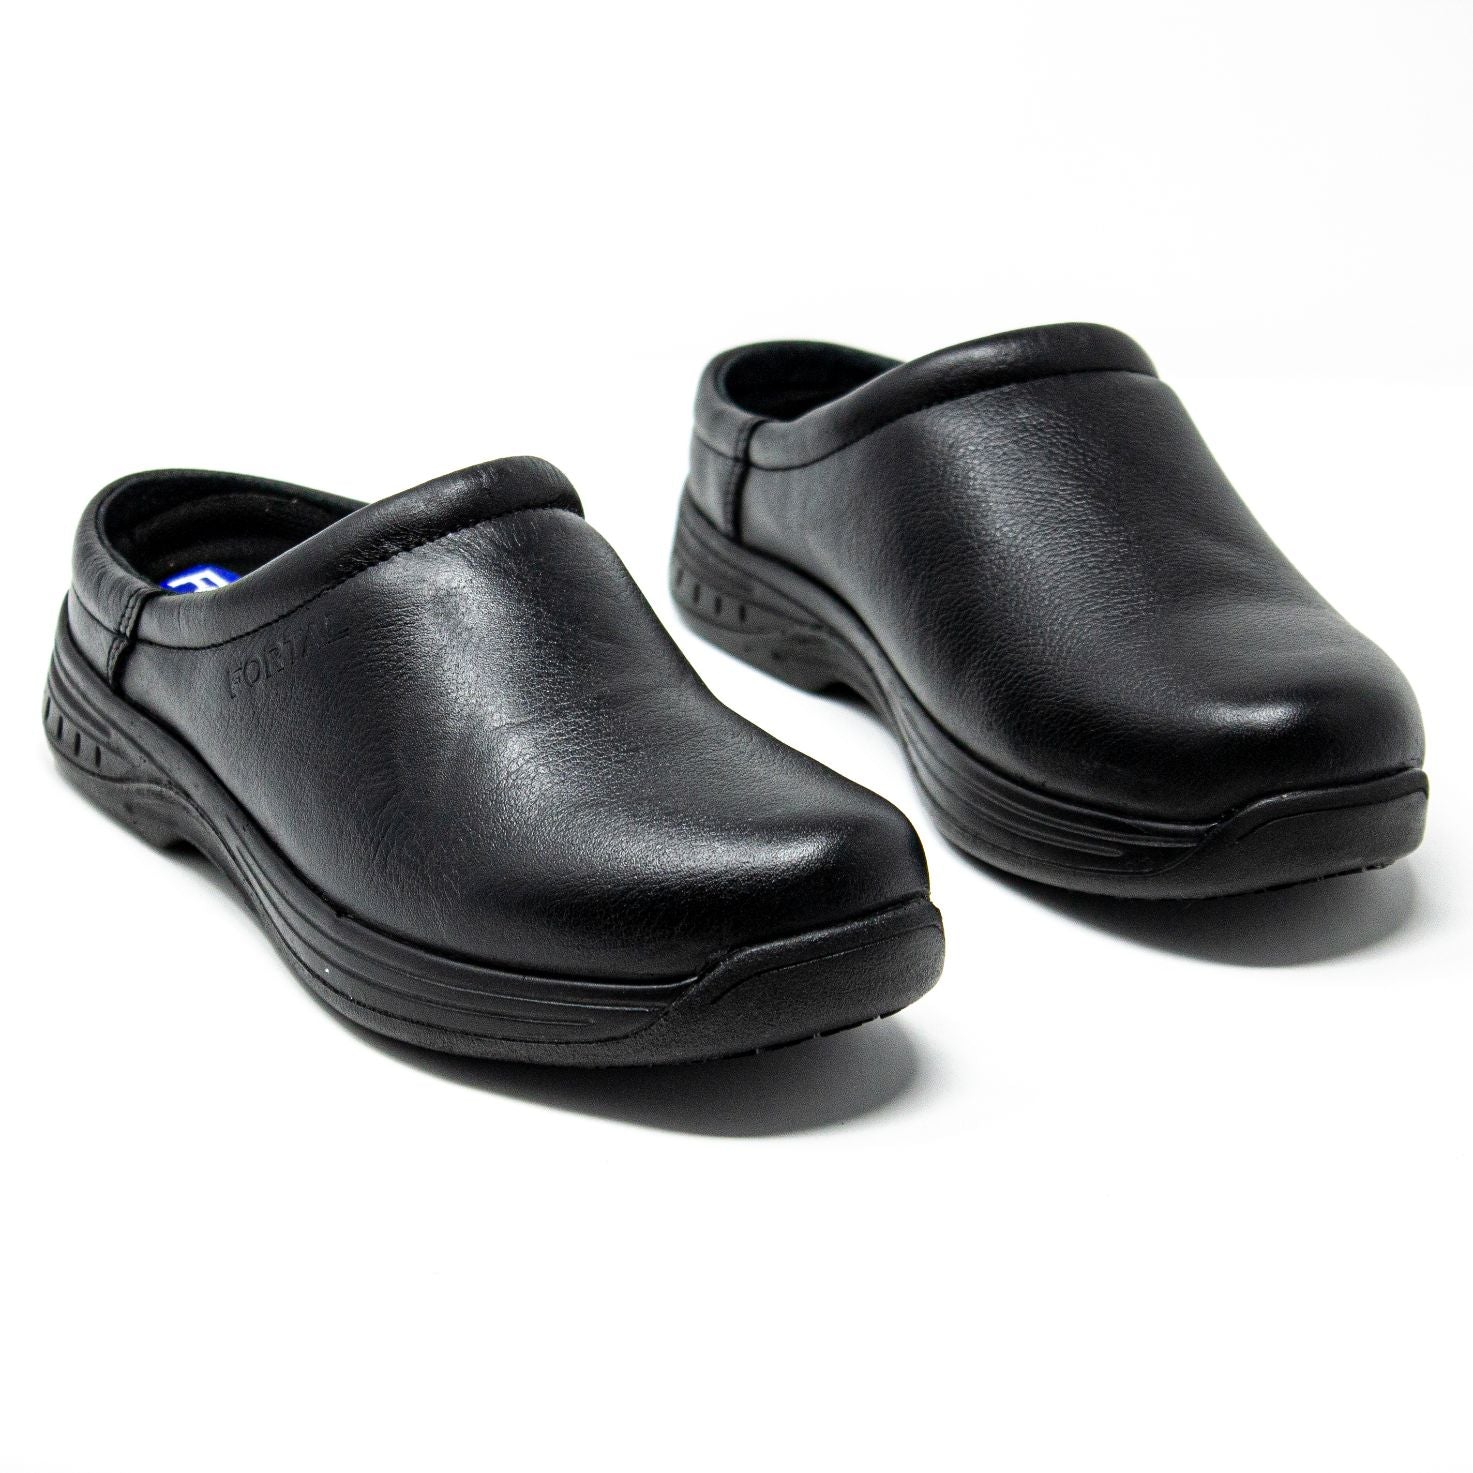 Women's Work Shoes - Non Slip - Black Work Shoes - Fortal - 0 - Negro Shoes